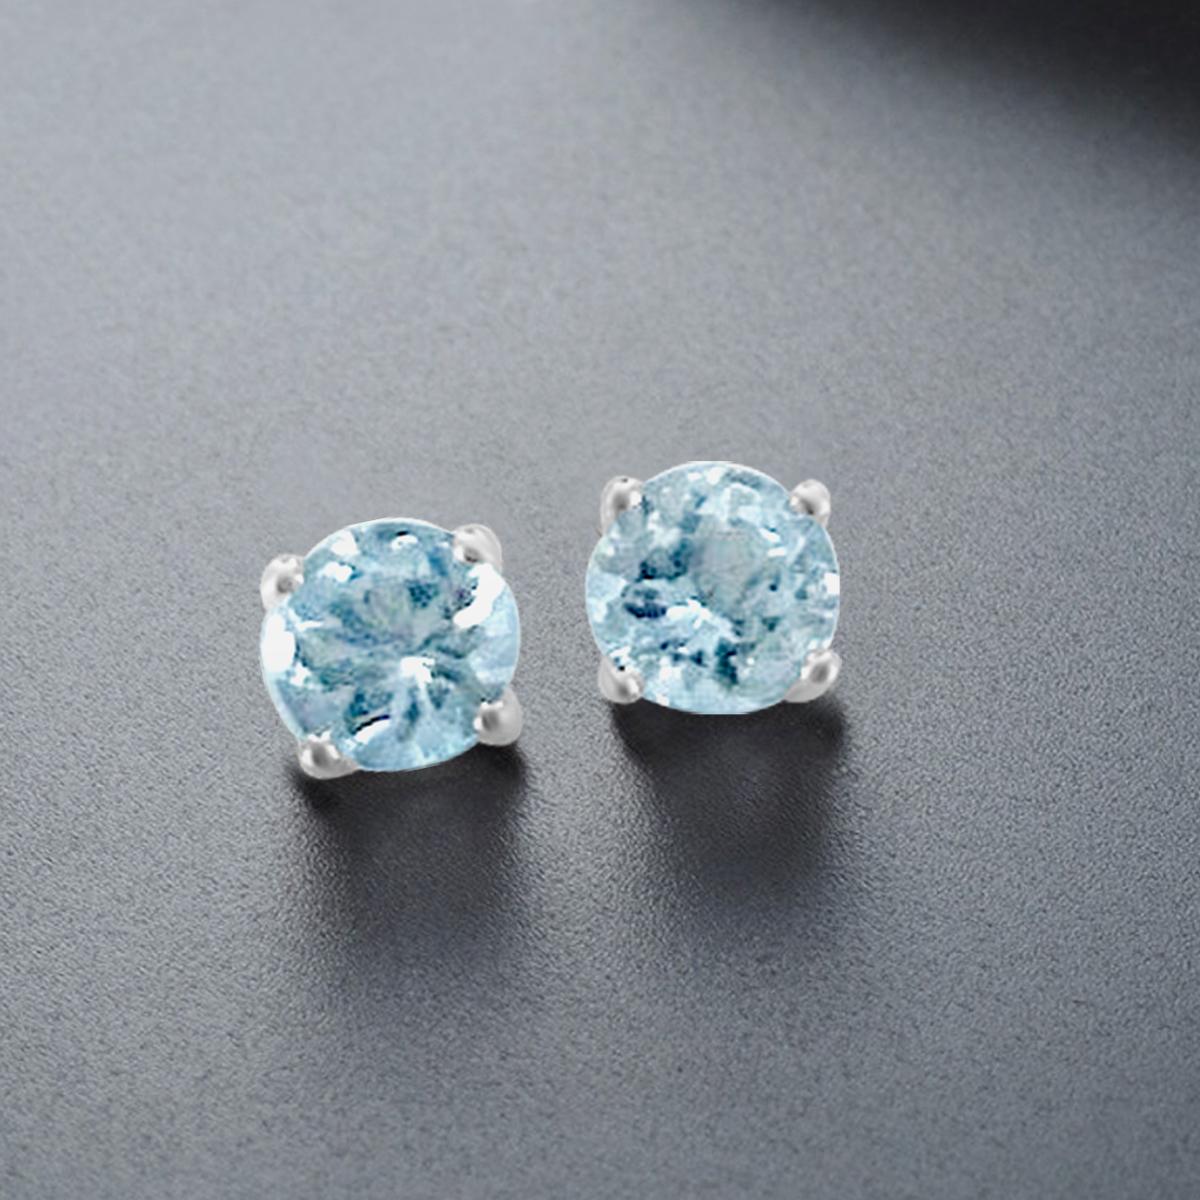 1.5 carat diamond earrings actual size